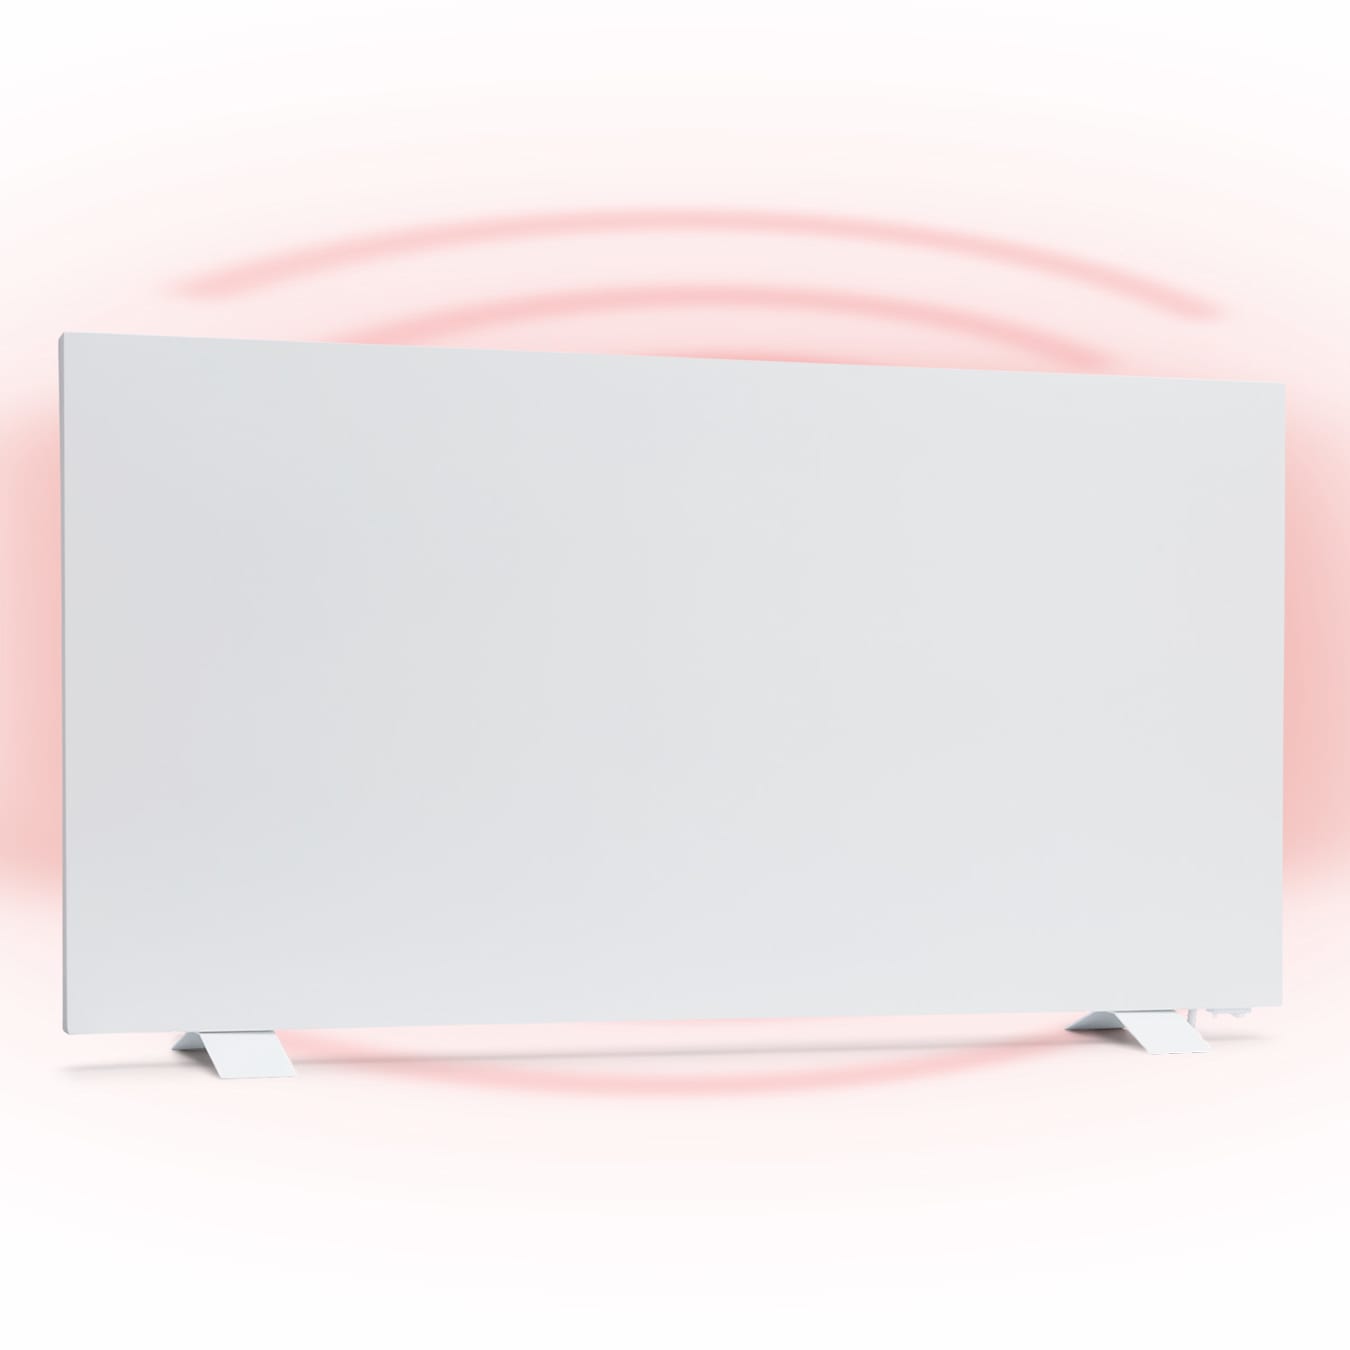 Taal Smart IR Heater Riscaldamento a infrarossi Pannello riscaldante ibrido, 105 x 56 cm, 750 W, IR ComfortHeat (30%) & riscaldamento a convezione  (70%), freestanding, Gestione intelligente, Tim 105 x 56 cm